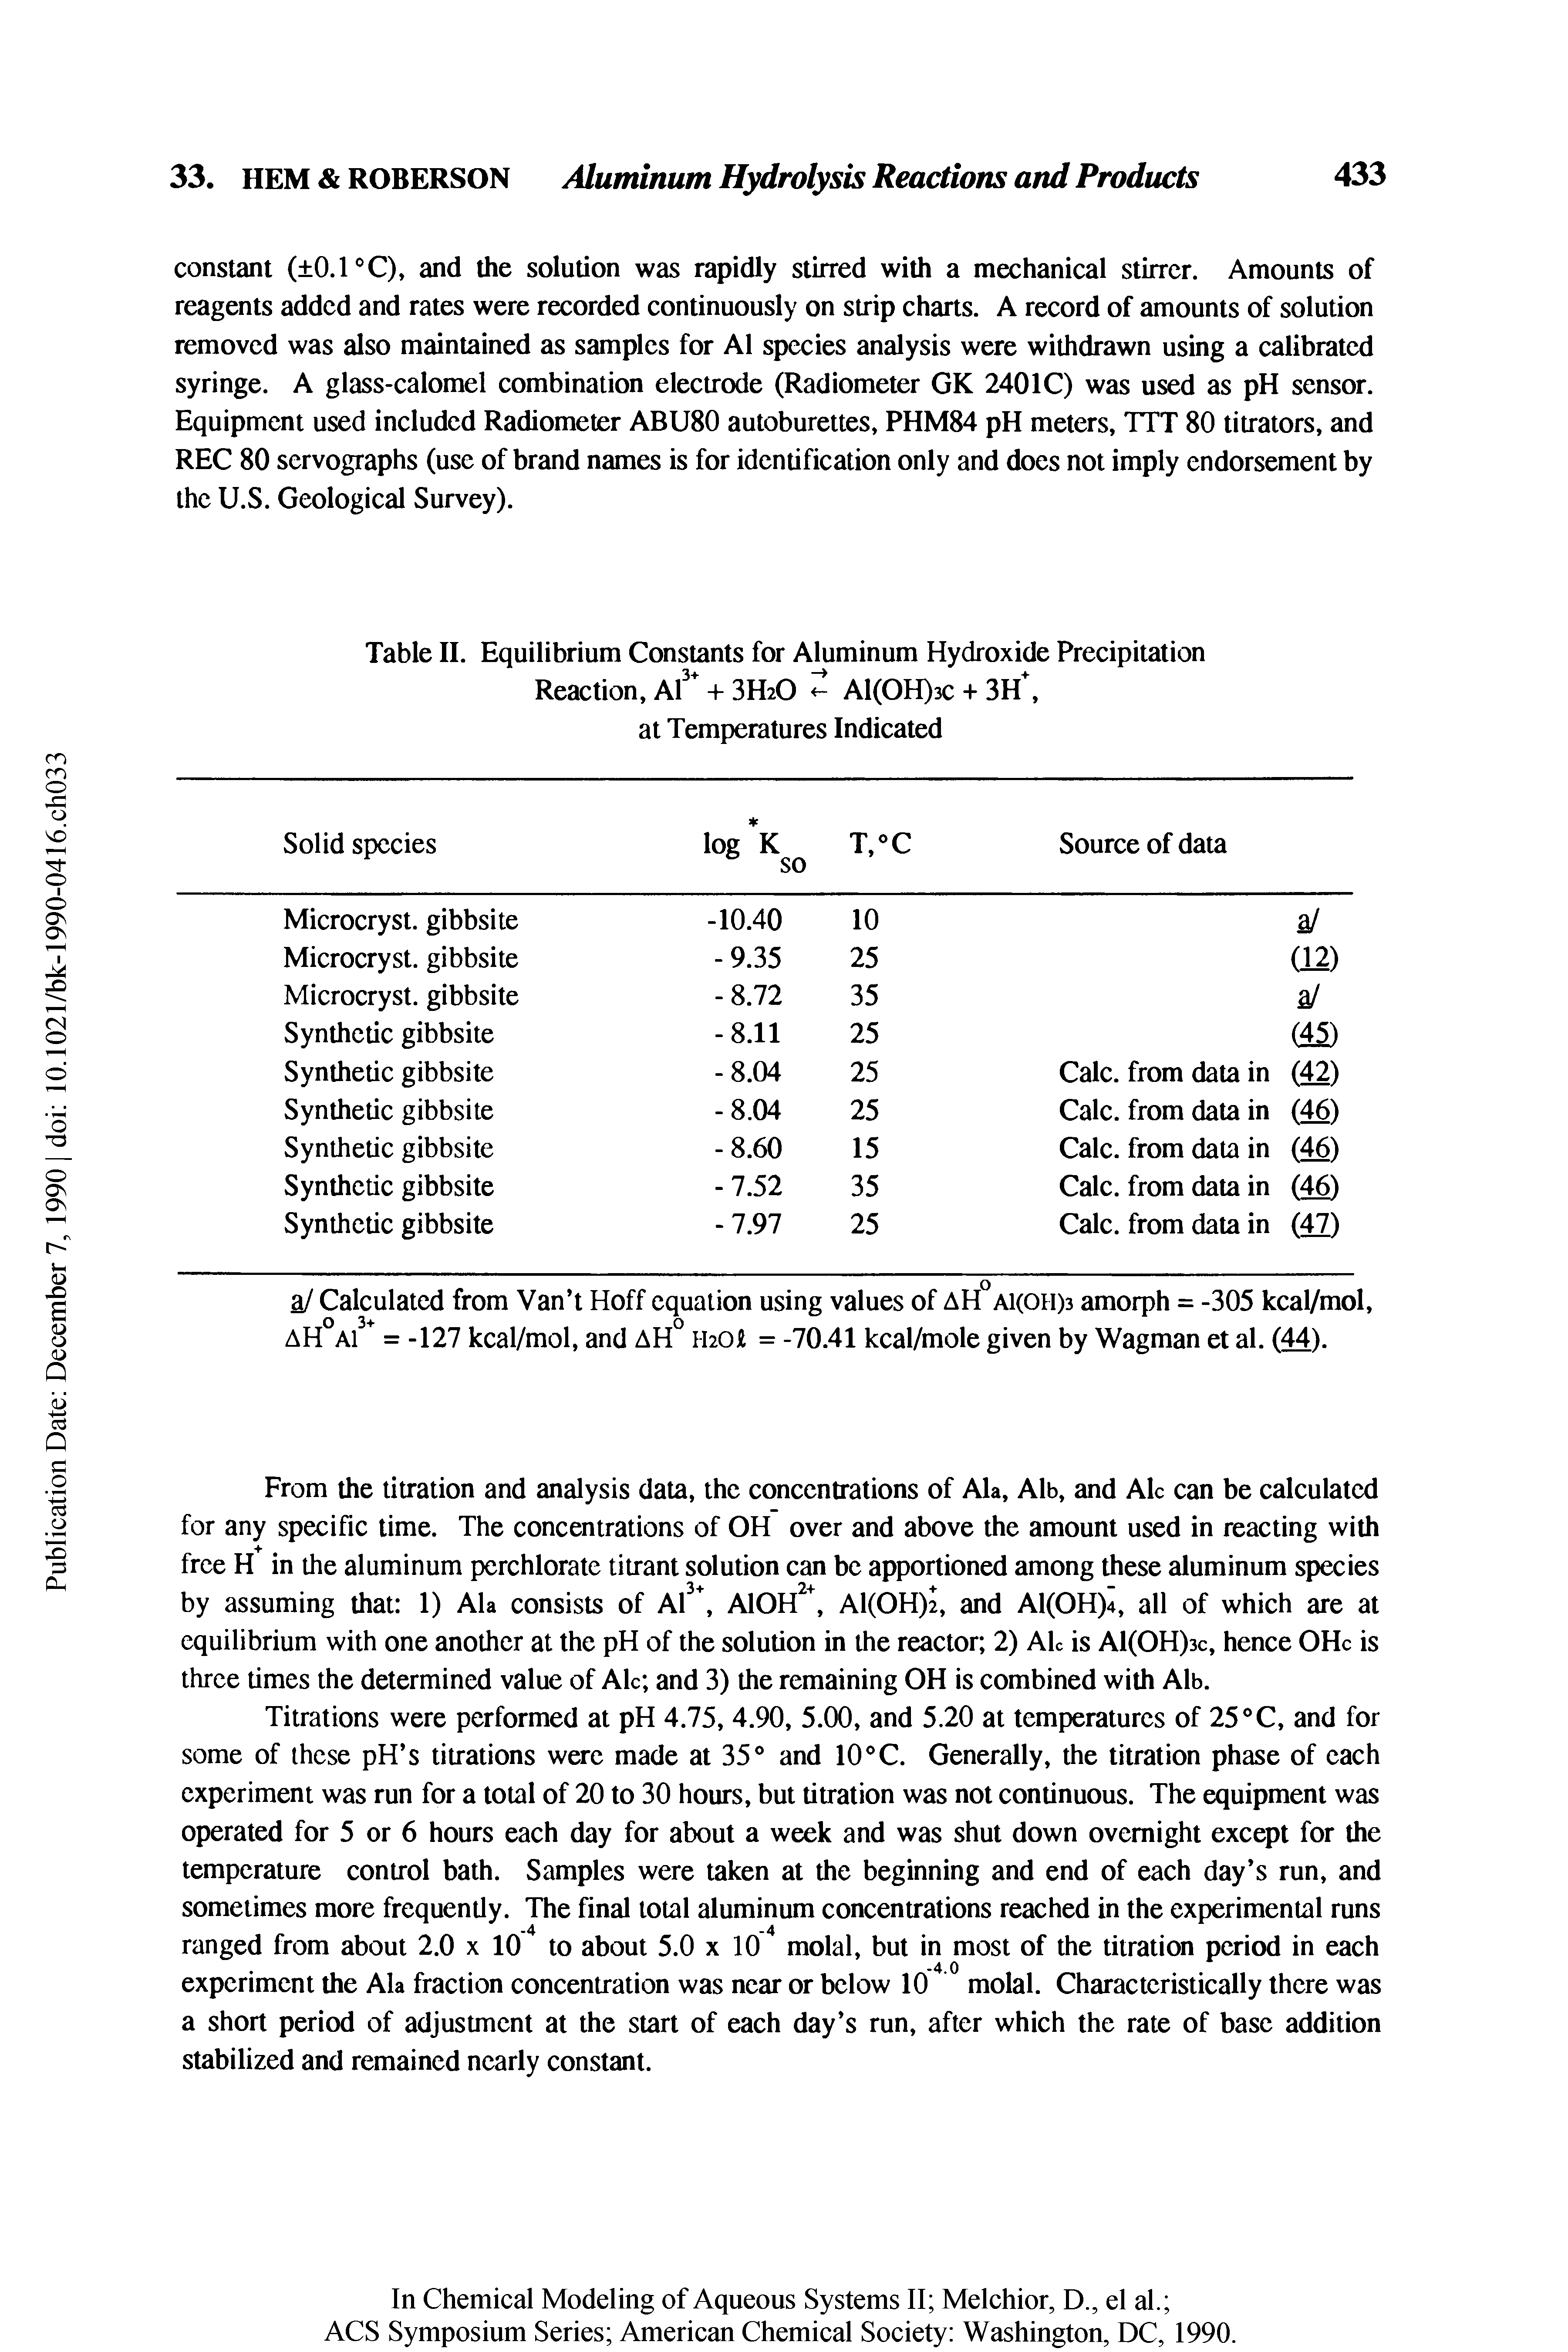 Table II. Equilibrium Constants for Aluminum Hydroxide Precipitation Reaction, Al + 3H2O Al(OH)3C + 3H, at Temperatures Indicated...